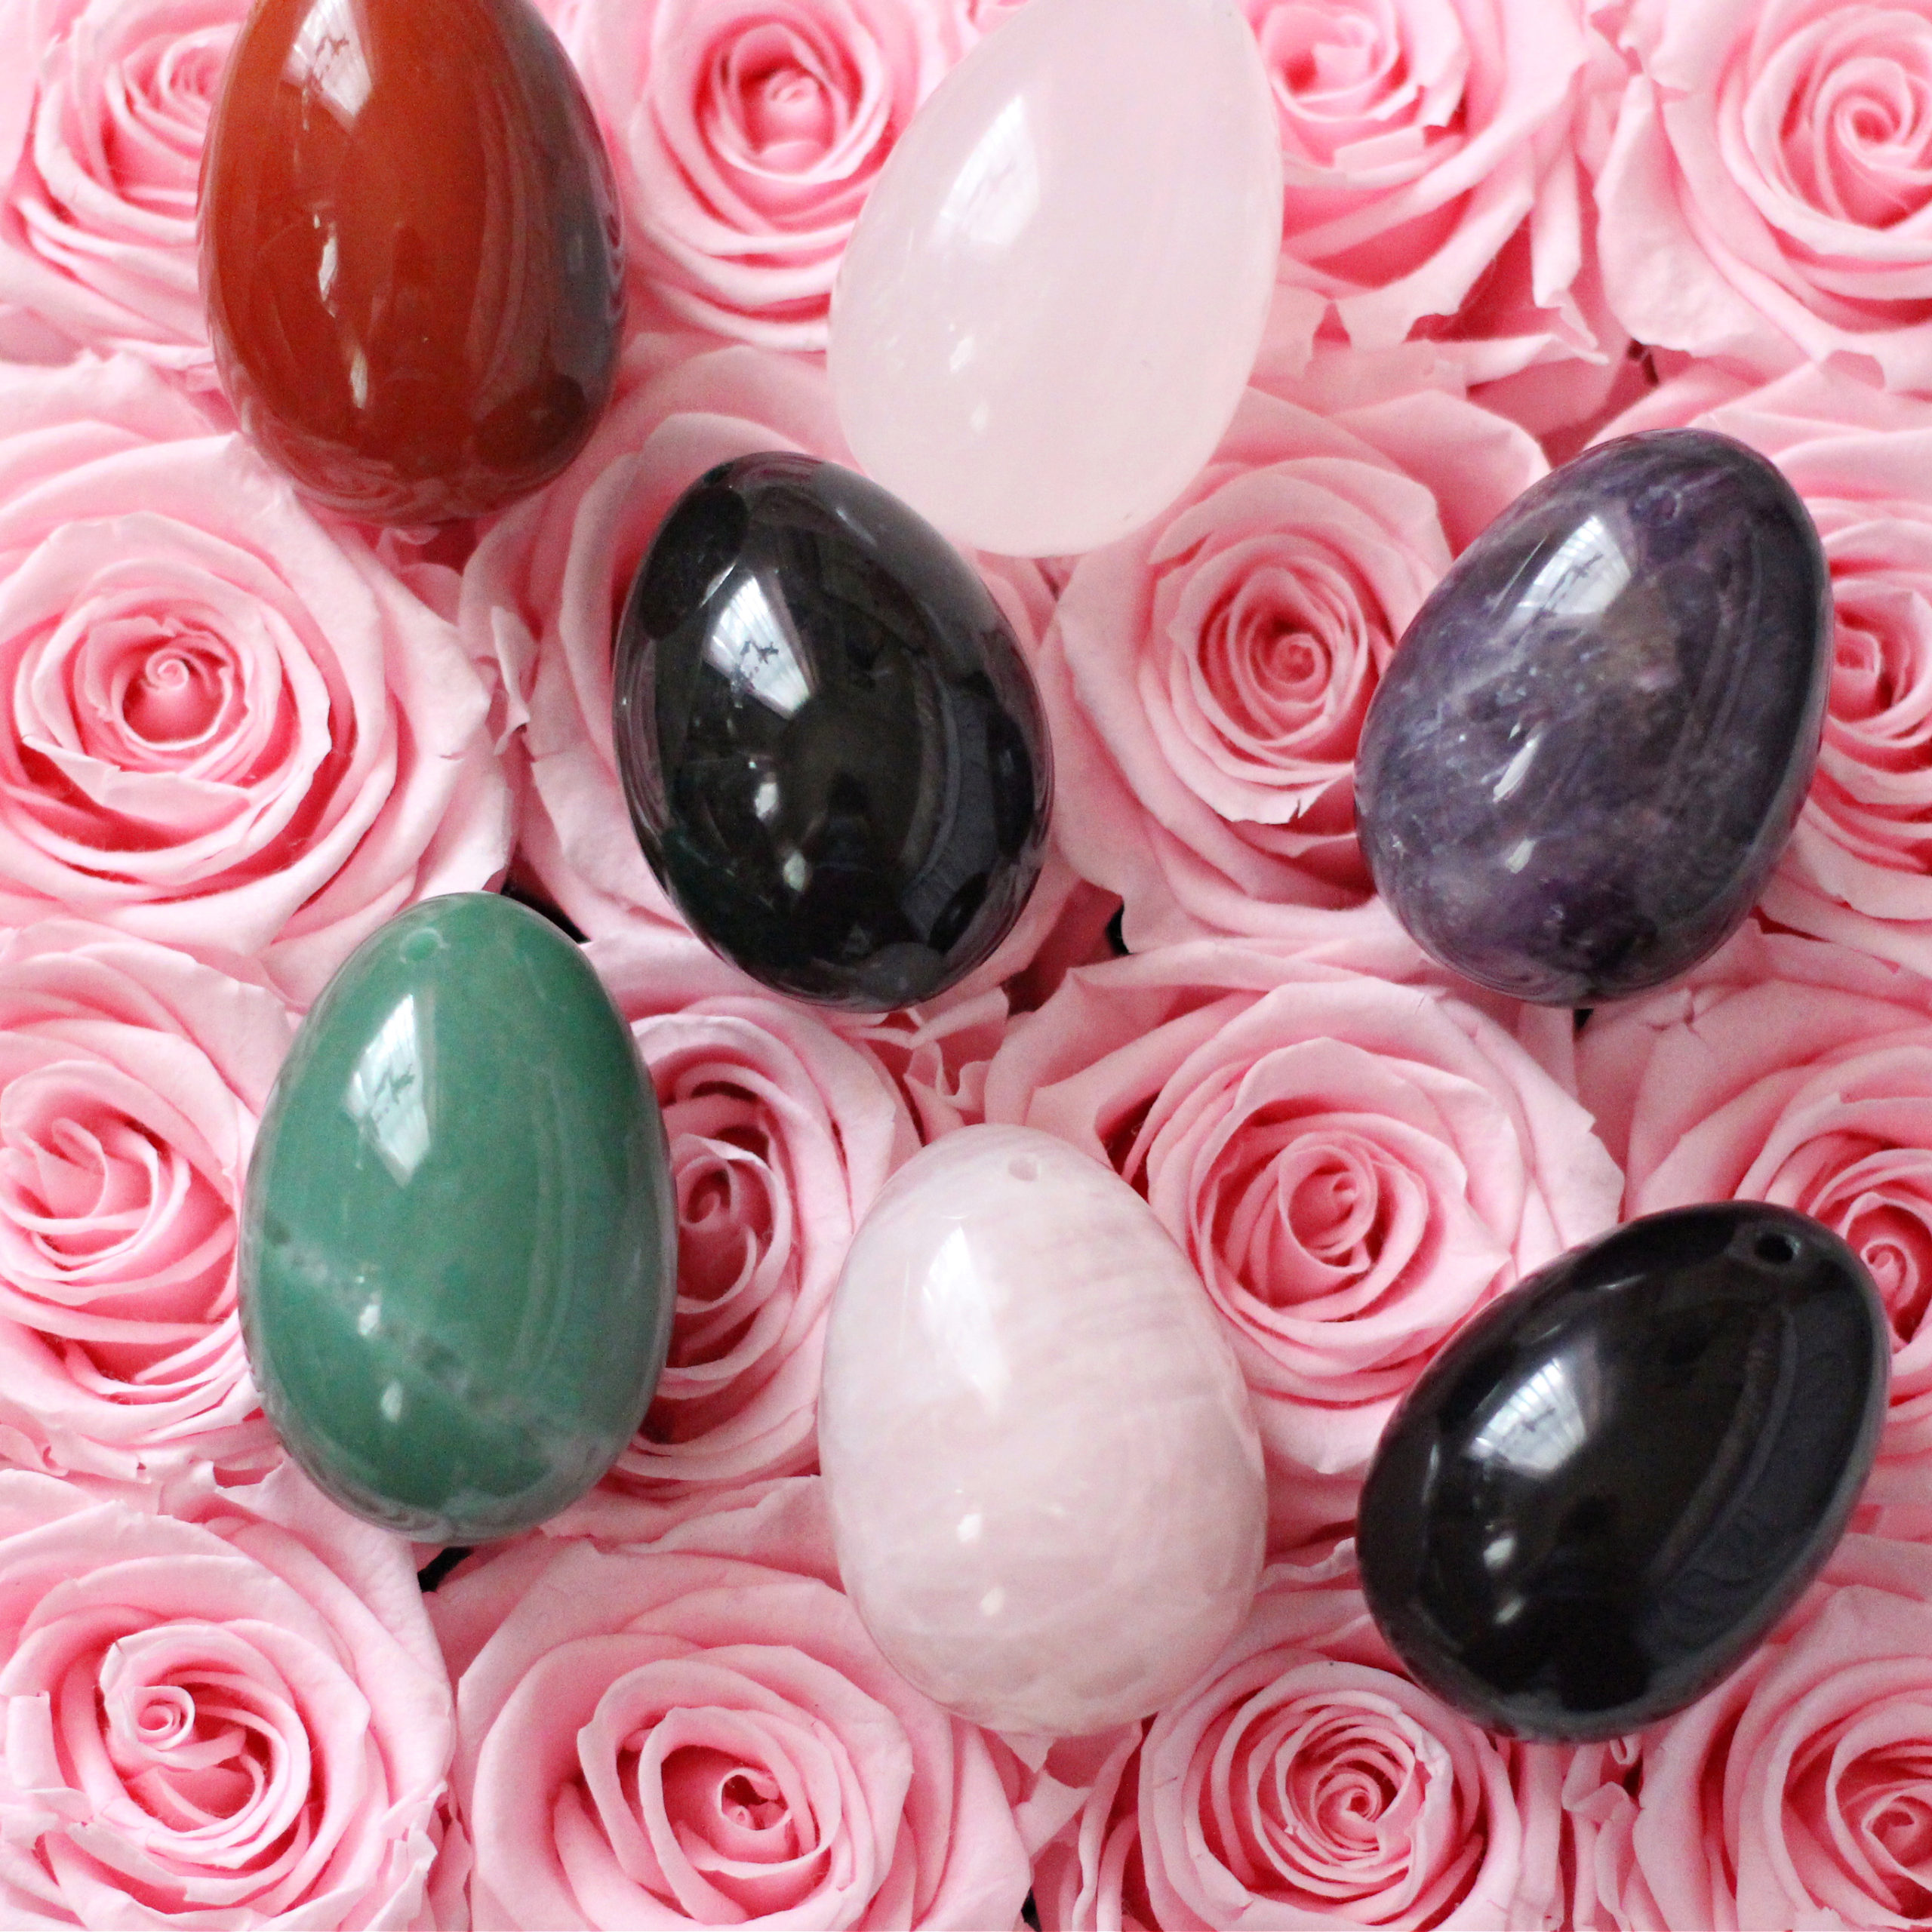 yoni egg use, what are yoni eggs, rose quartz gemstone, crystal healing, crystal, kegel exercise, jade egg, divine feminine energy, divine feminine meaning, dance,